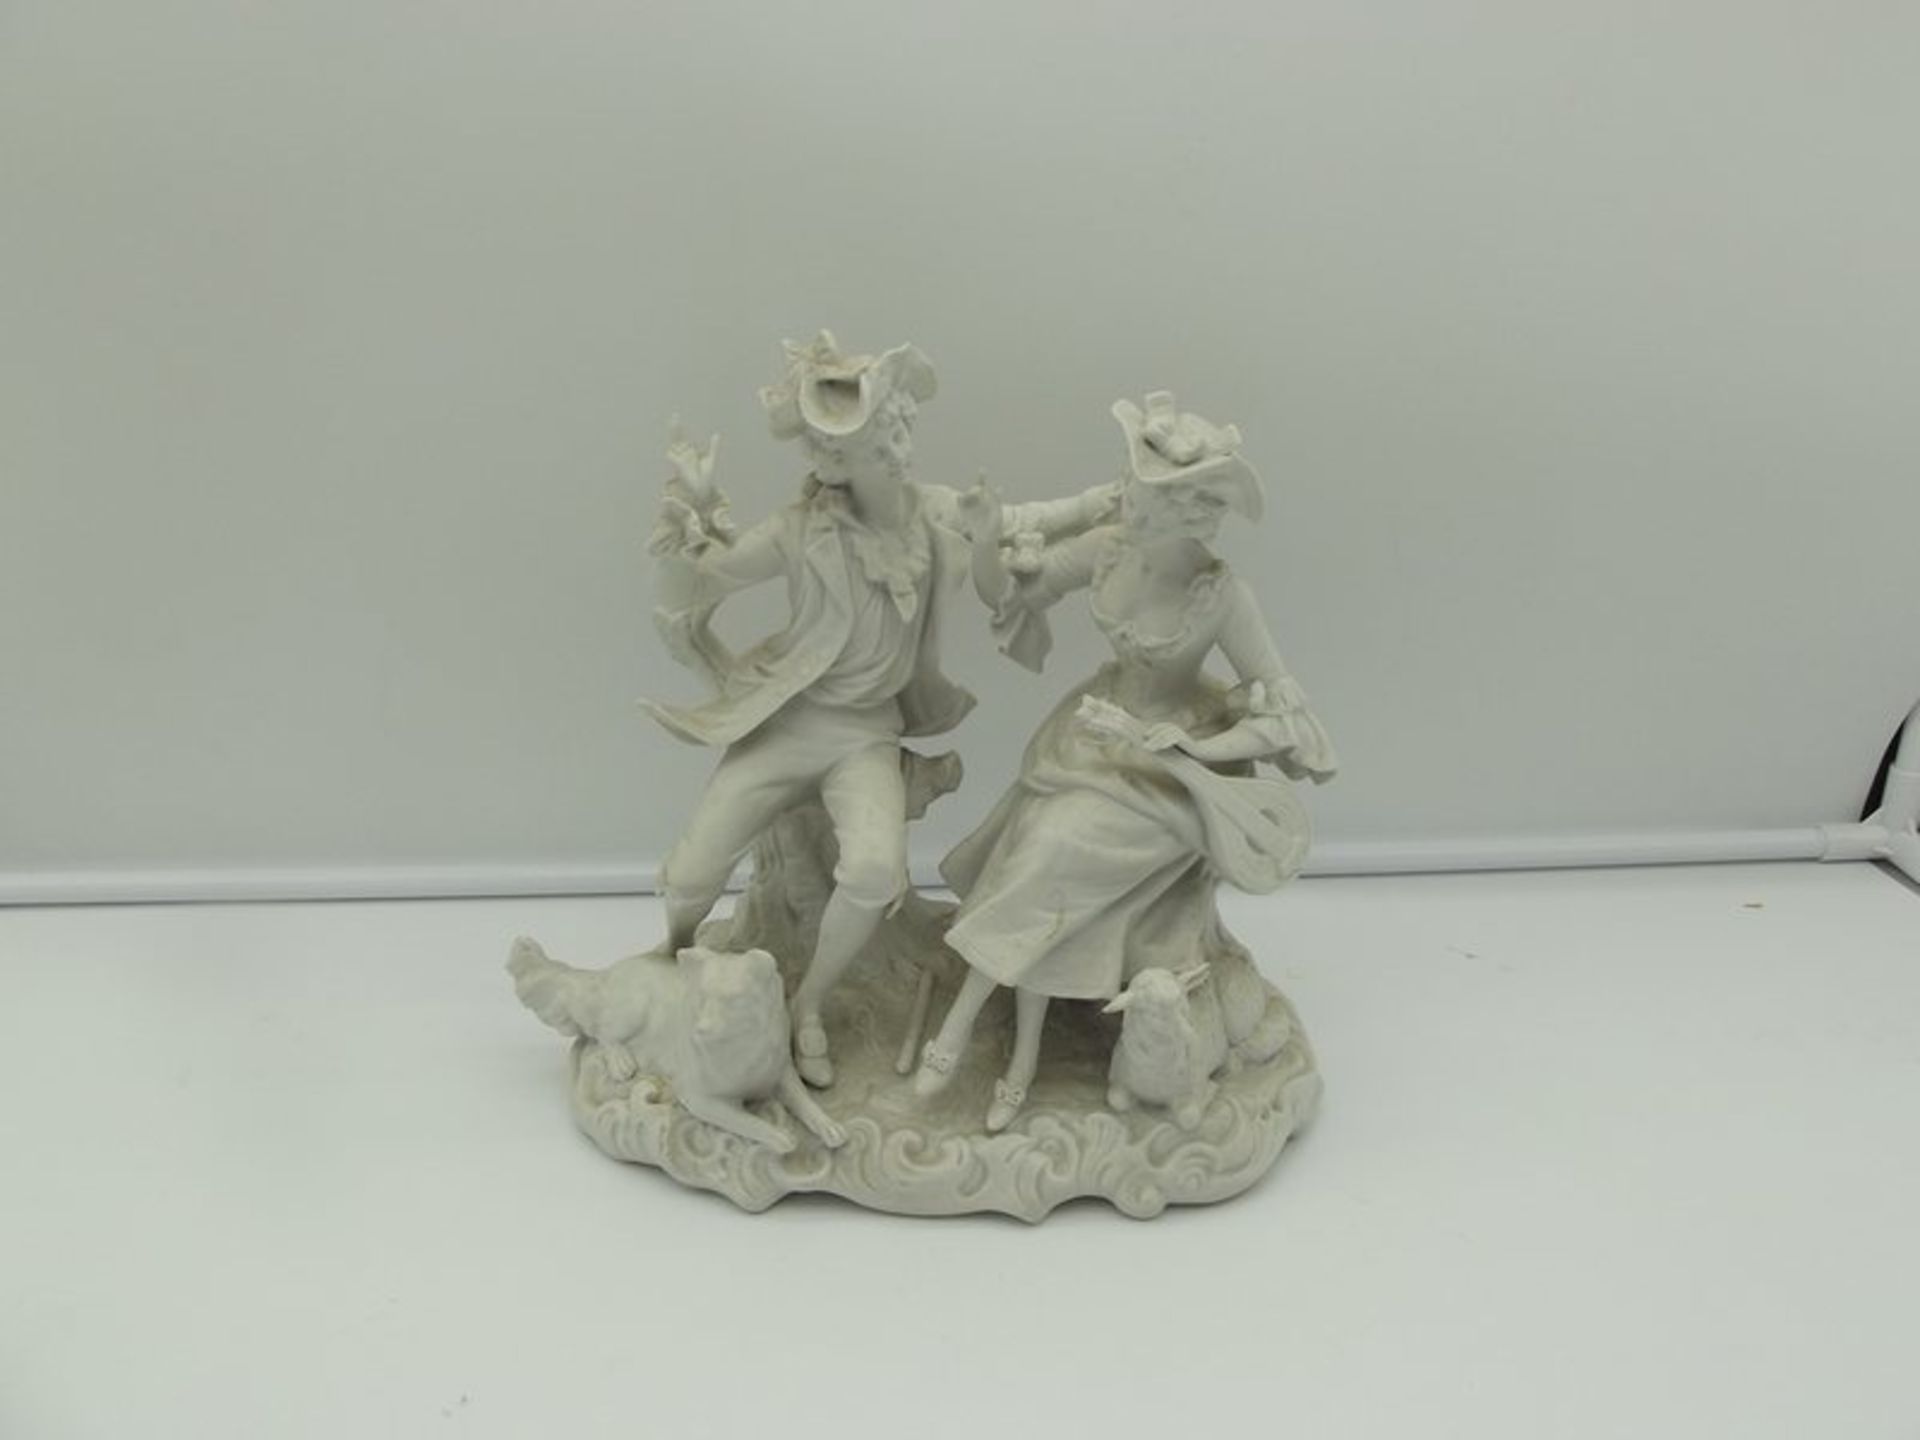 biscuit porcelain sculpture France 19th century H24 cm. small defects